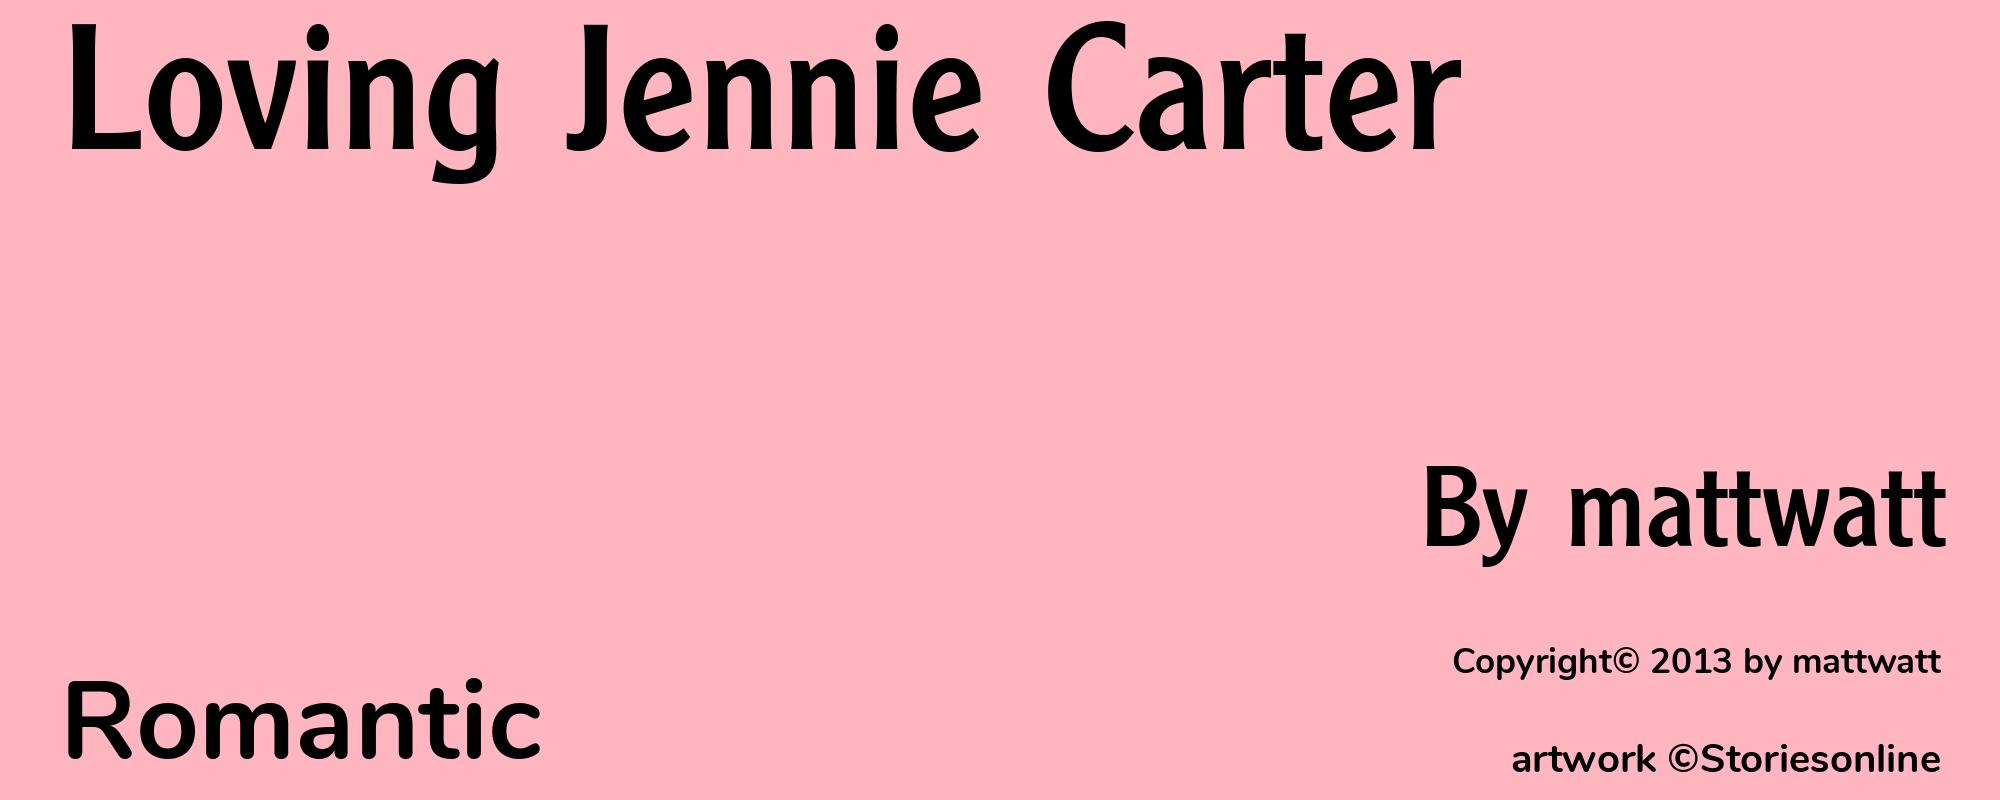 Loving Jennie Carter - Cover